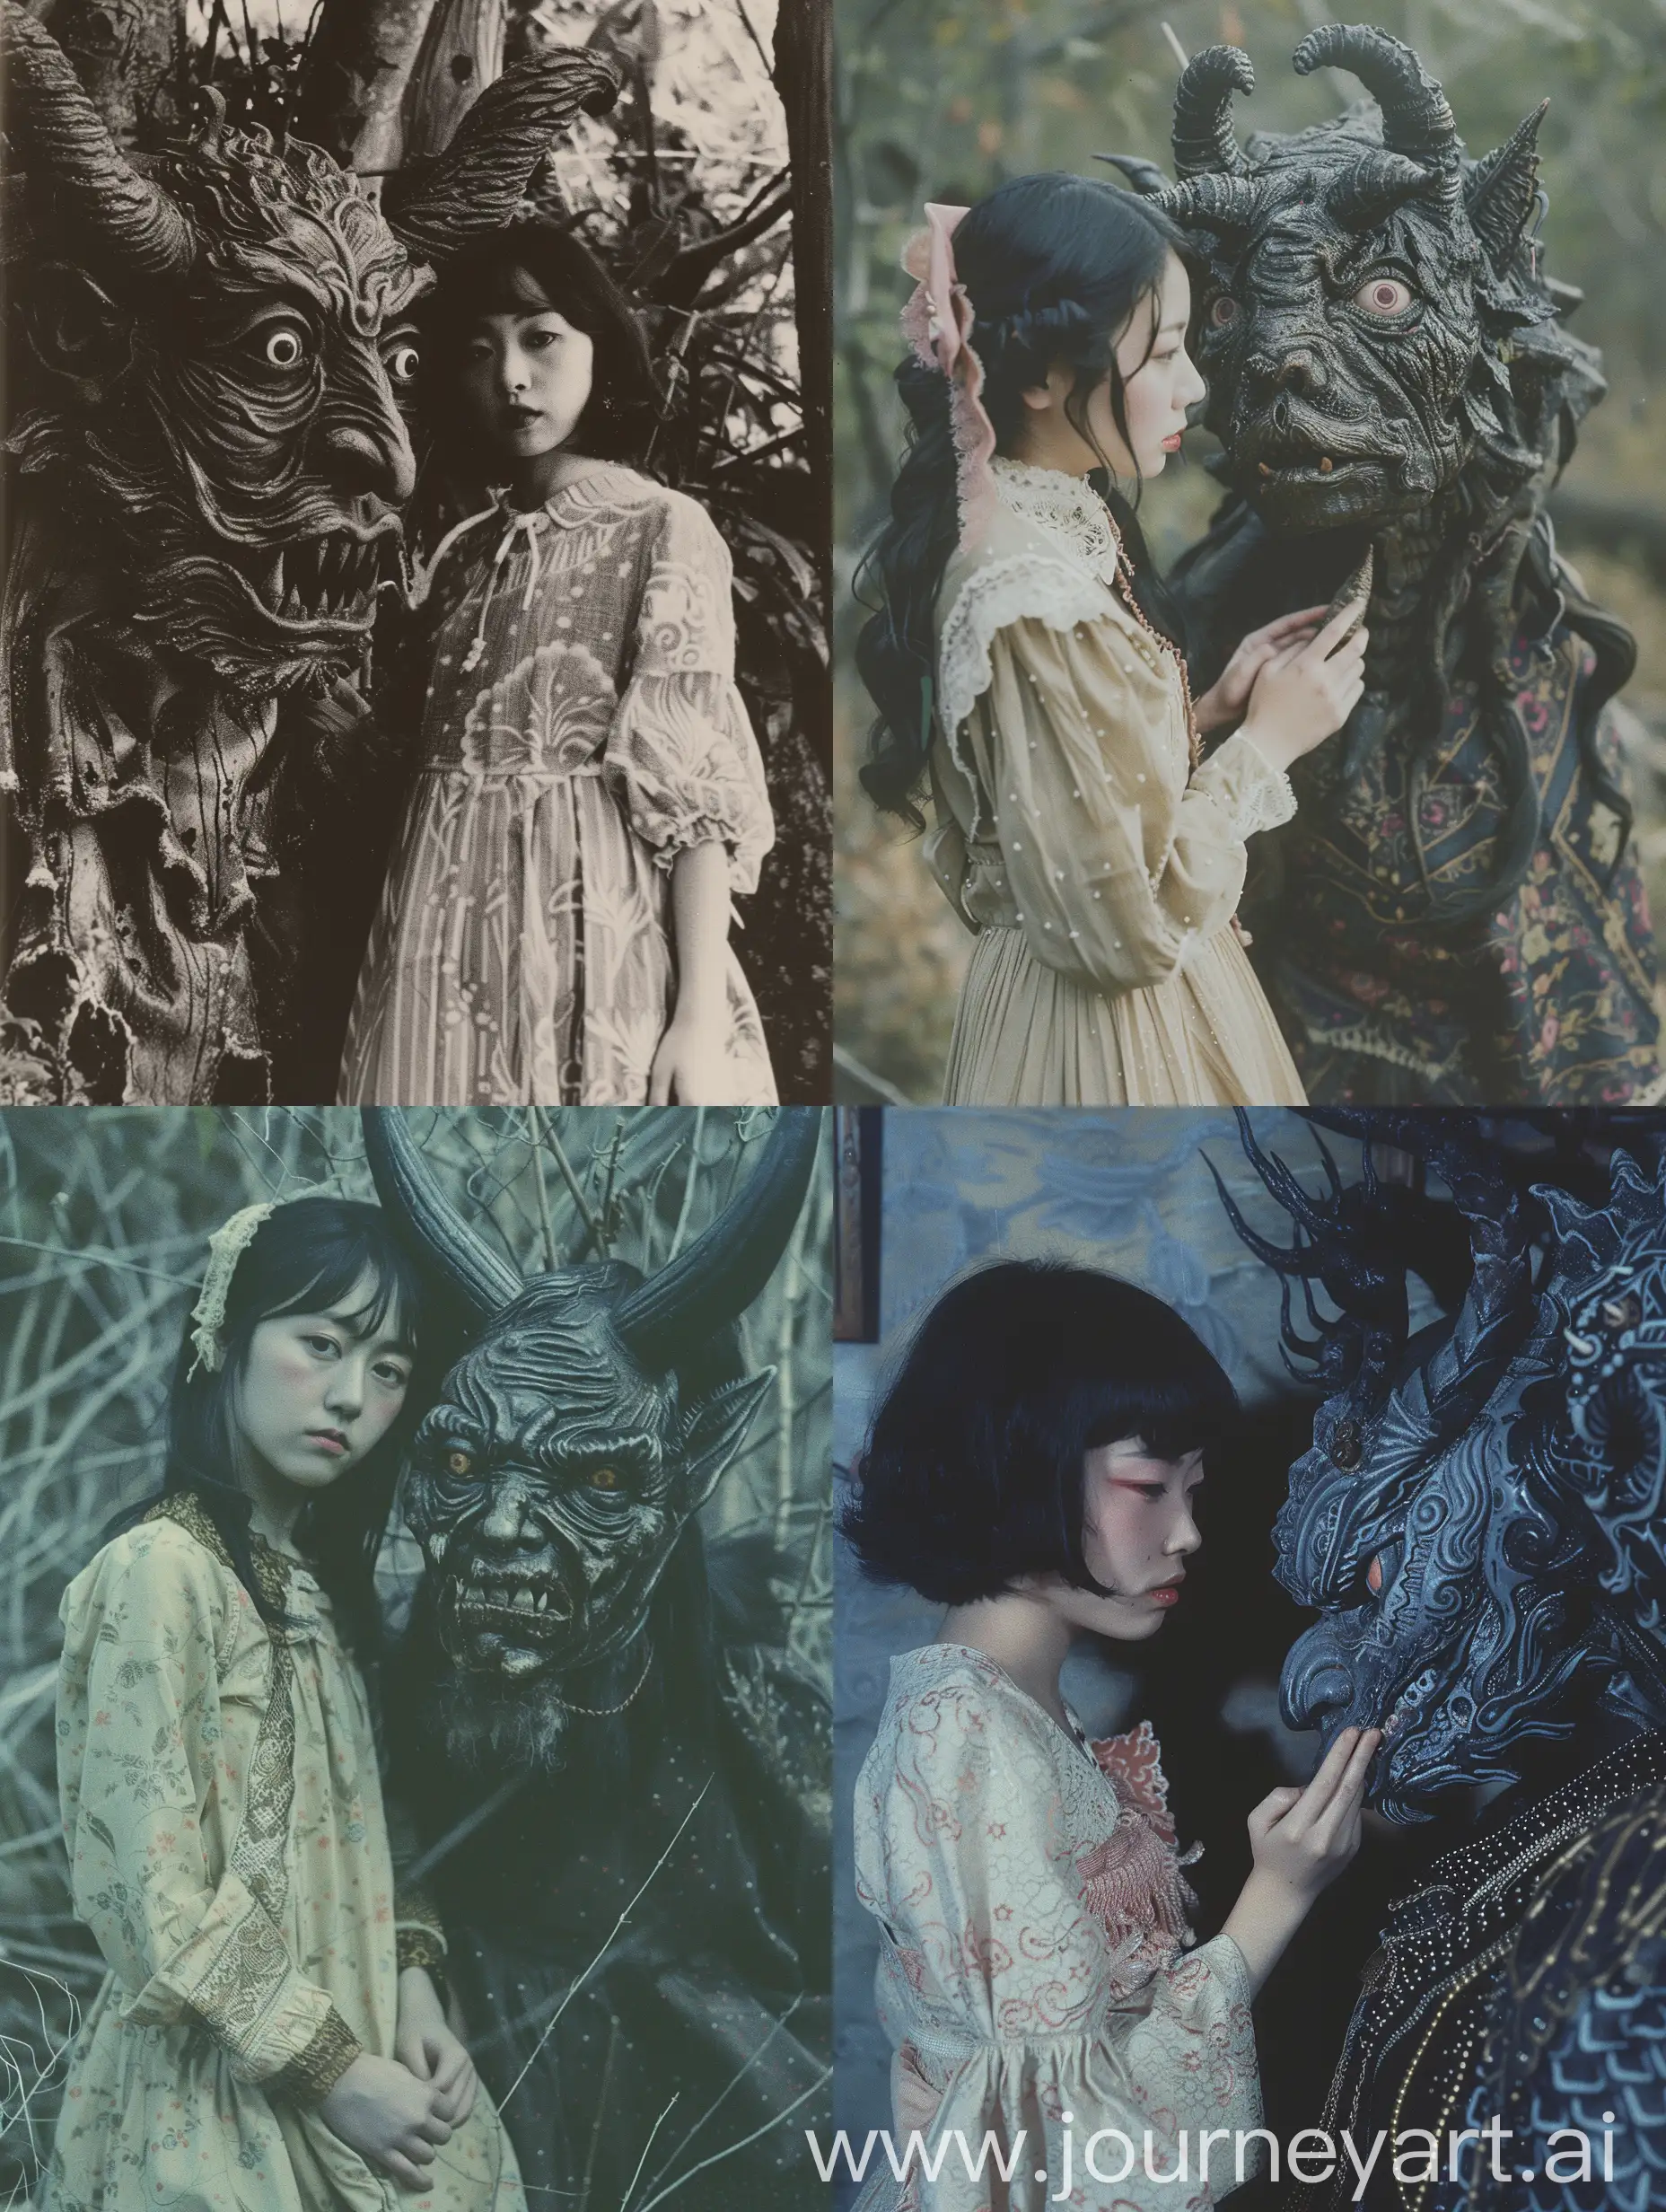 Mysterious-Encounter-Japanese-Woman-and-Dark-Demonic-Deity-in-Folk-Horror-Setting